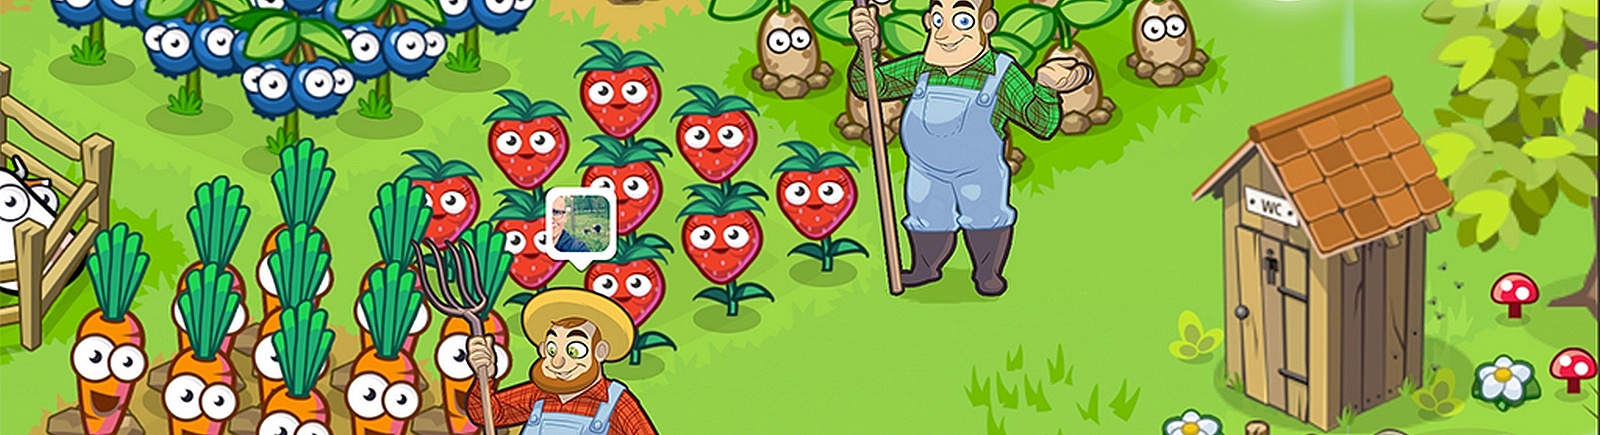 Дата выхода Farm and Click - Idle Farming Clicker (Веселый Ферма Кликер)  на iOS и Android в России и во всем мире